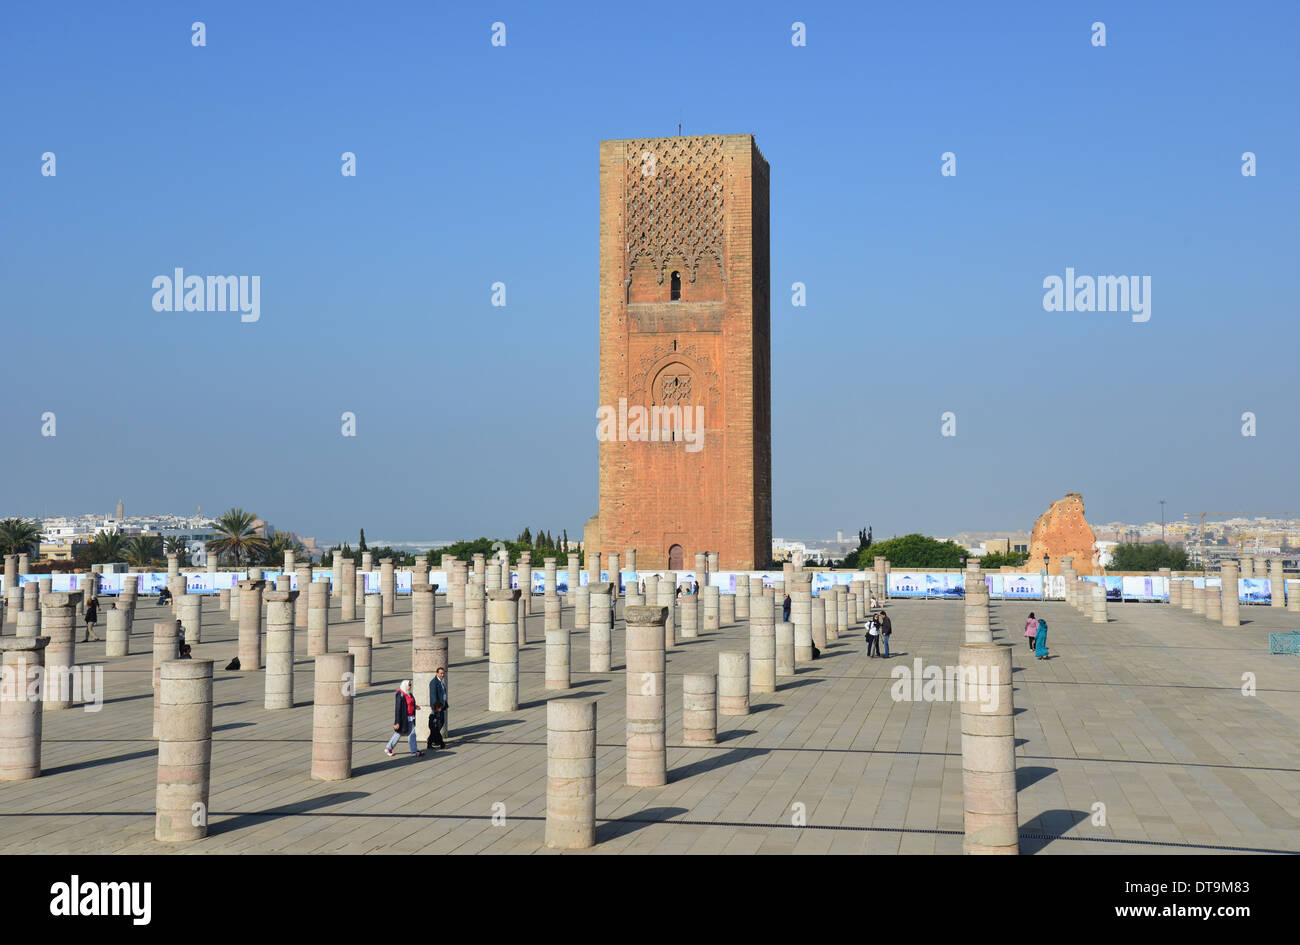 Hassan Tower (Tour Hassan), Boulevard Mohamed Lyazidi, Rabat, Rabat-Salé-Zemmour-Zaer Region, Kingdom of Morocco Stock Photo